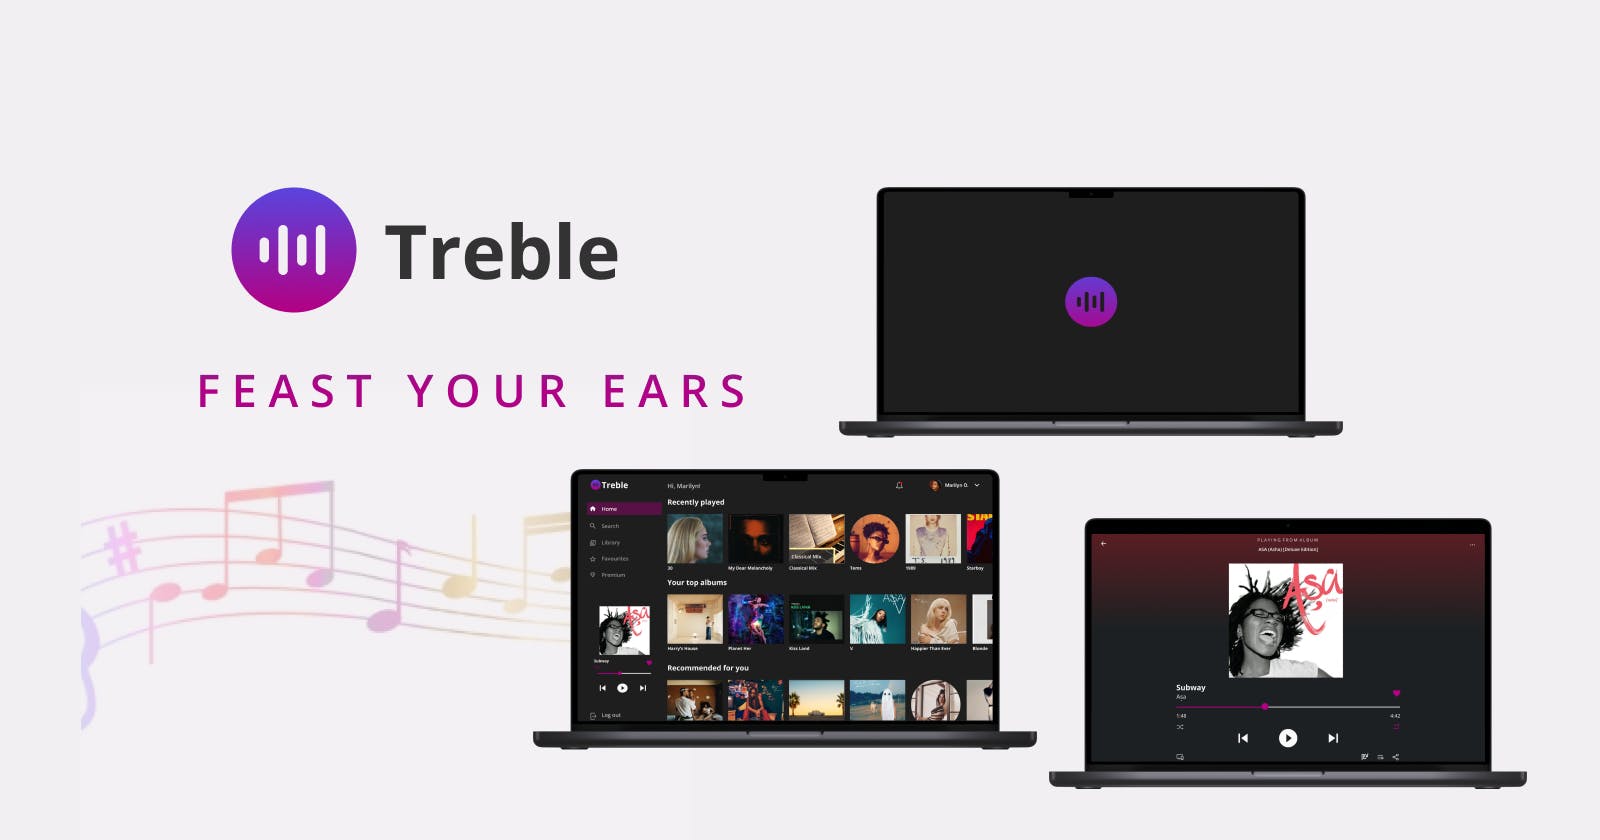 Treble: Designing a Memorable Listening Experience